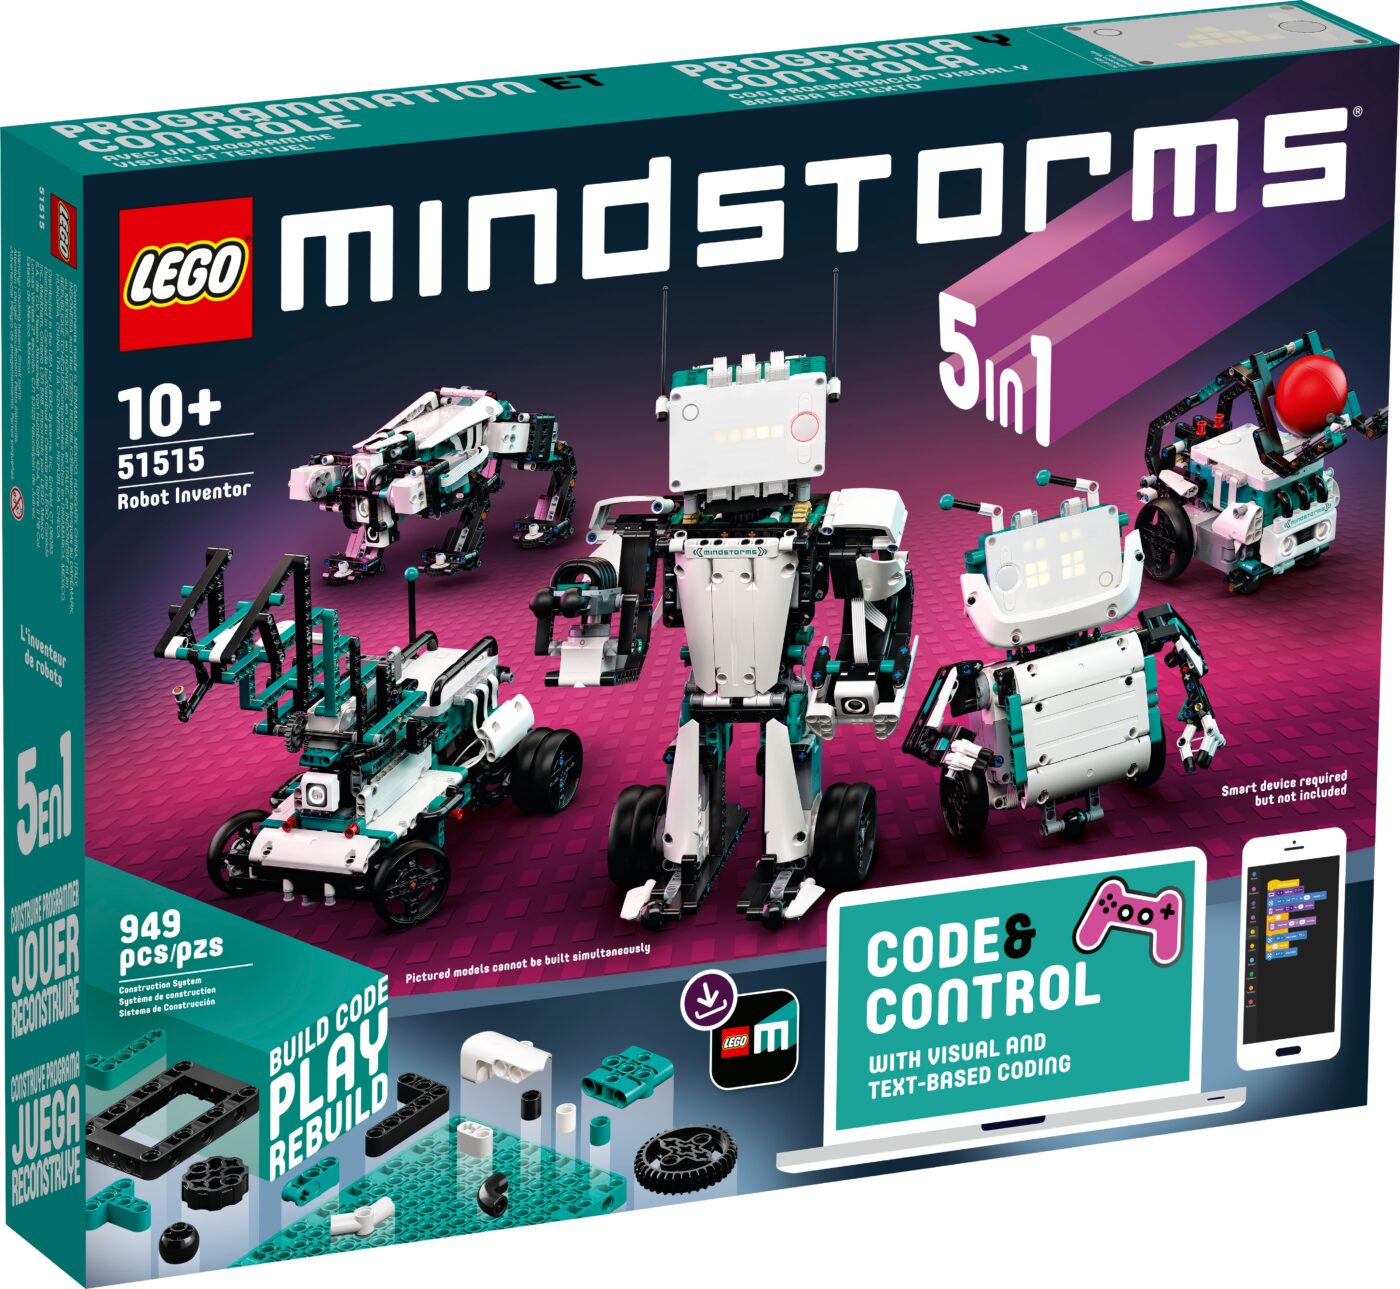 LEGO is killing Mindstorms - Jay's Brick Blog